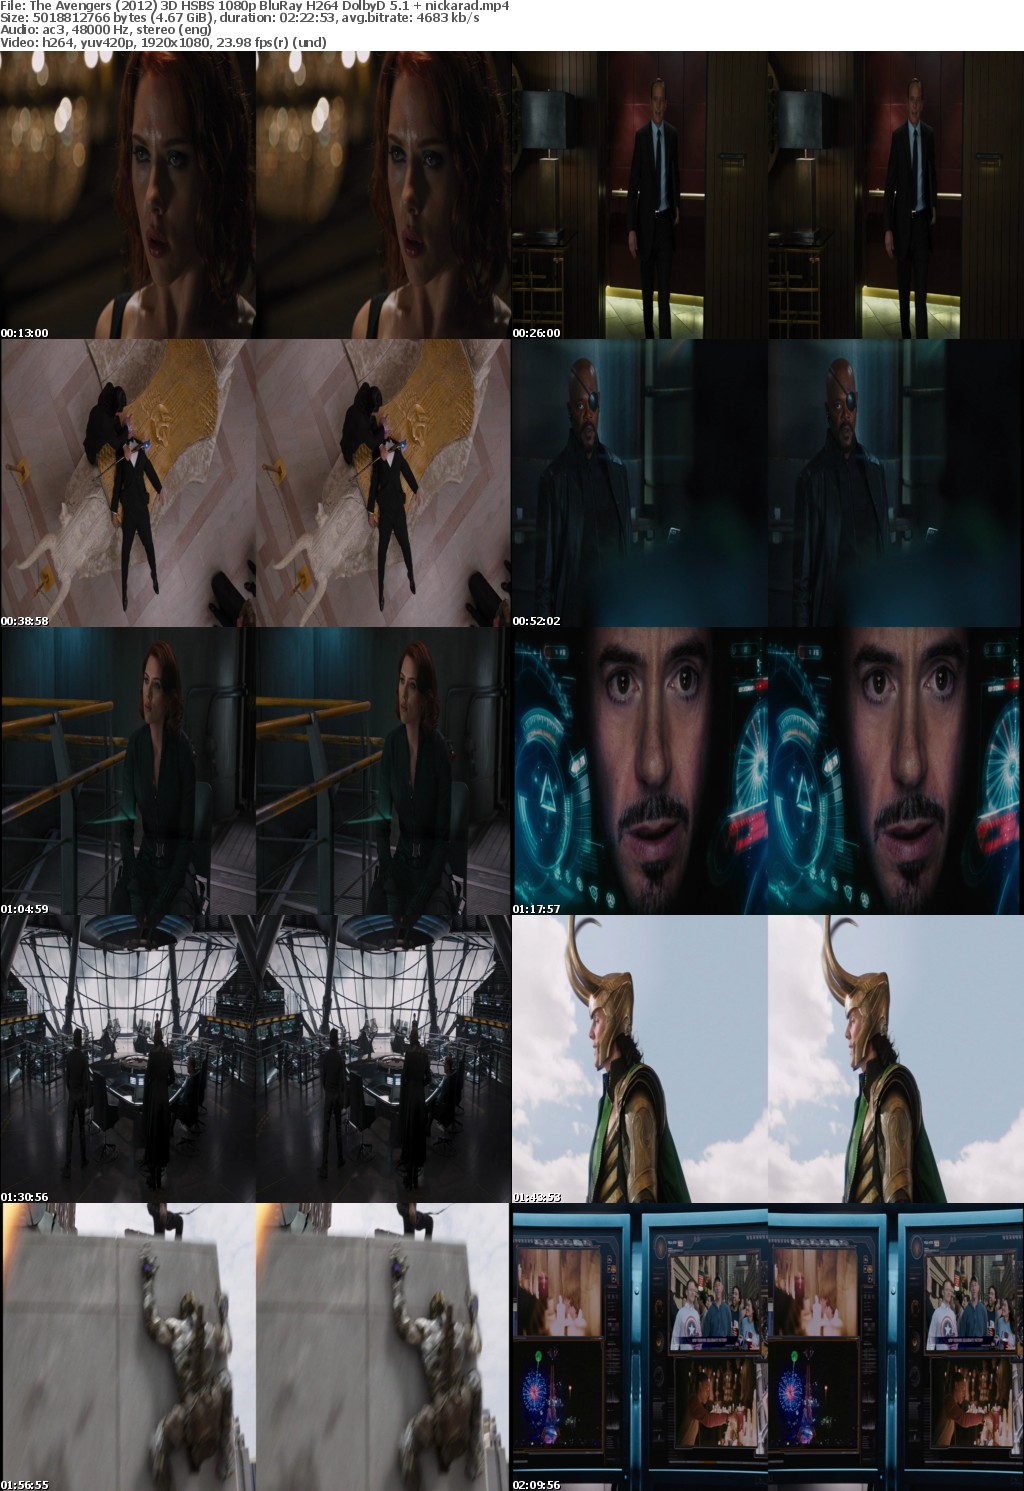 The Avengers (2012) 3D HSBS 1080p BluRay H264 DolbyD 5 1 nickarad